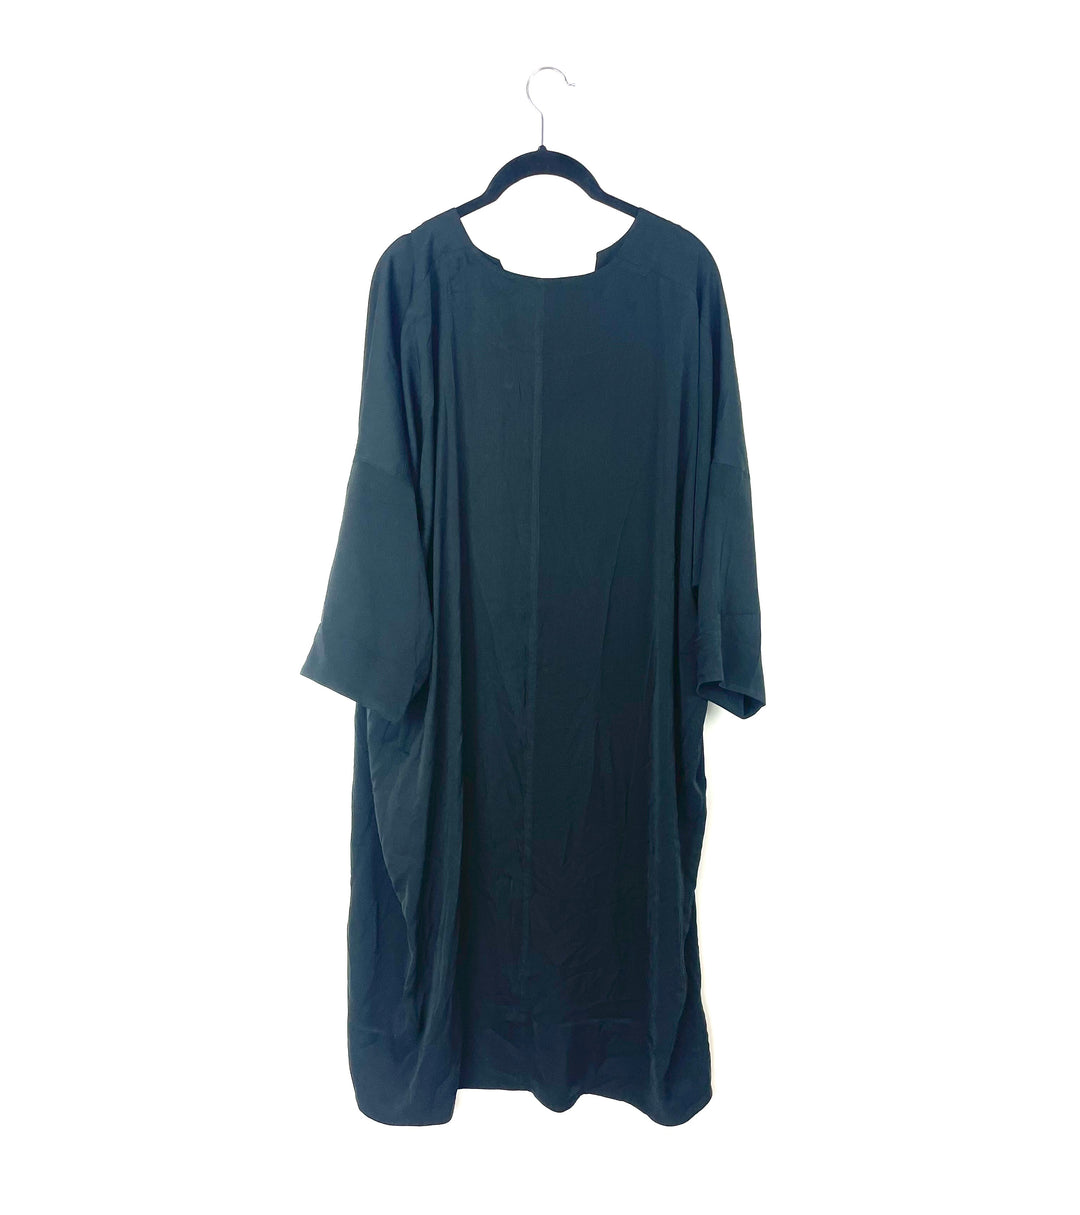 Black Lounge Dress / Nightgown - Small / Medium